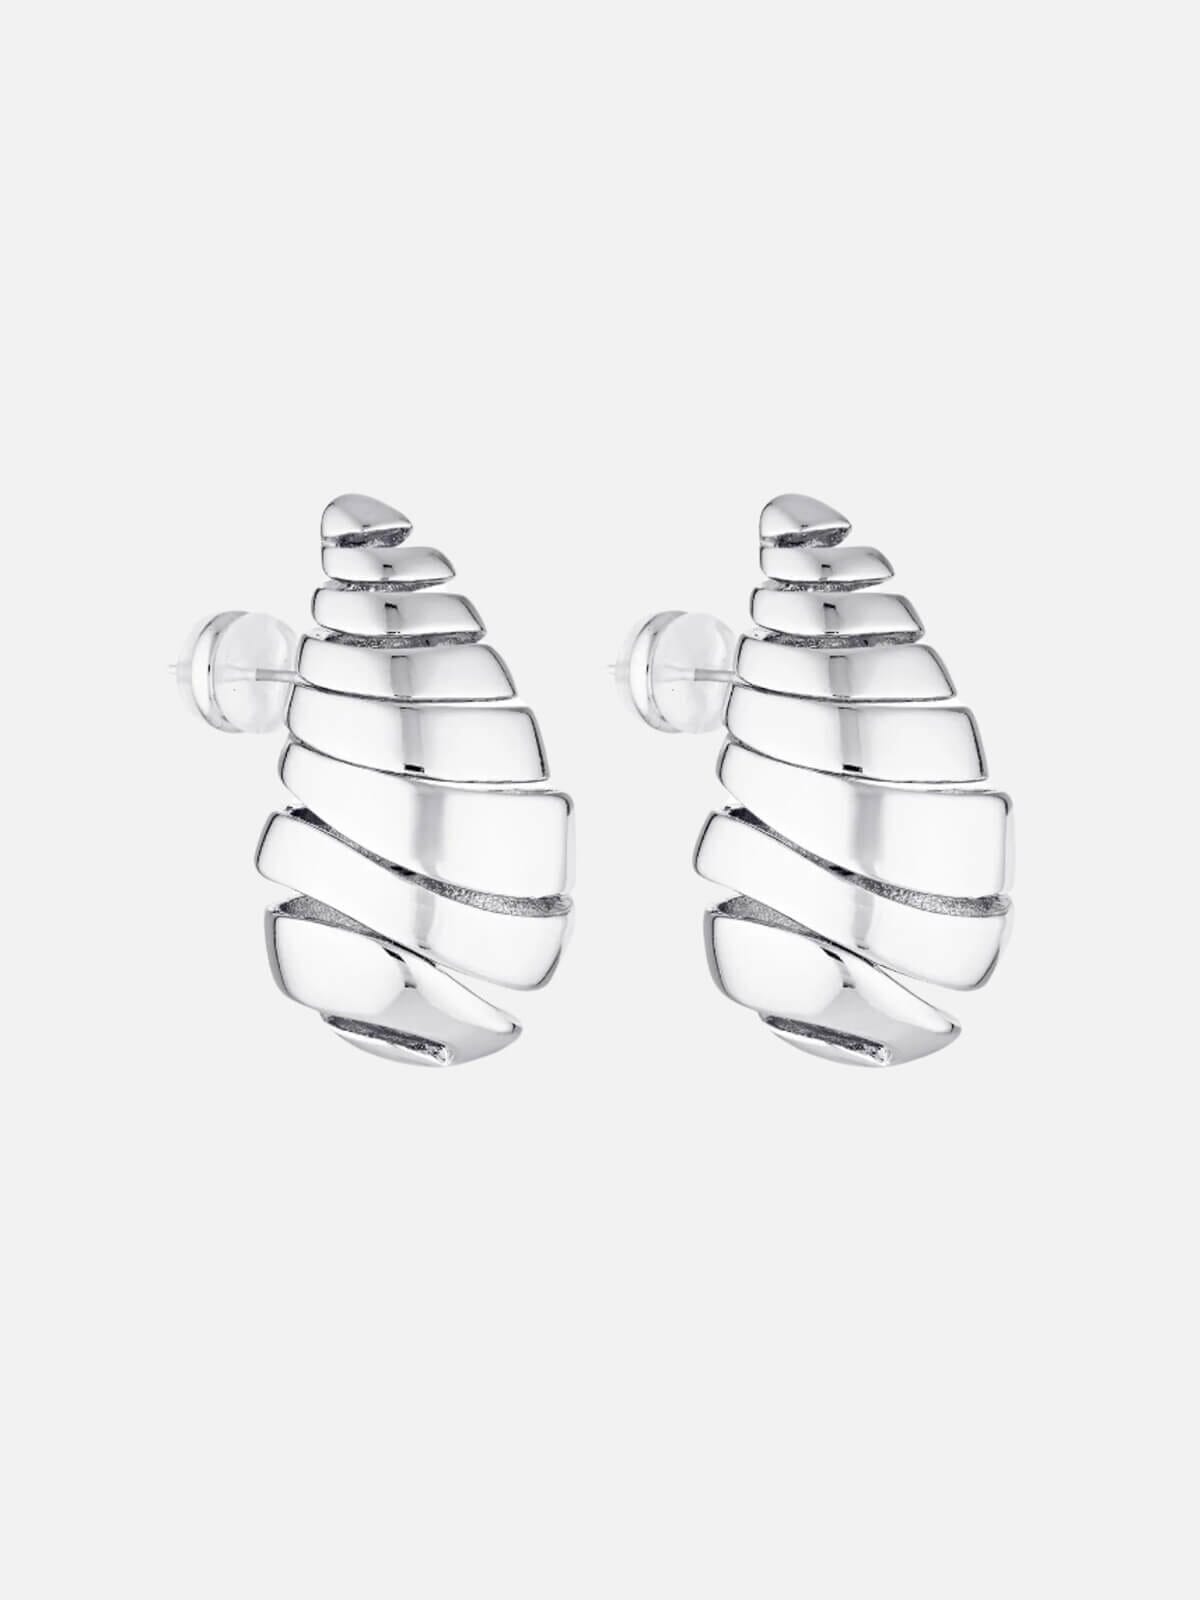 Porter | Blob Earrings - Spiral Silver | Perlu